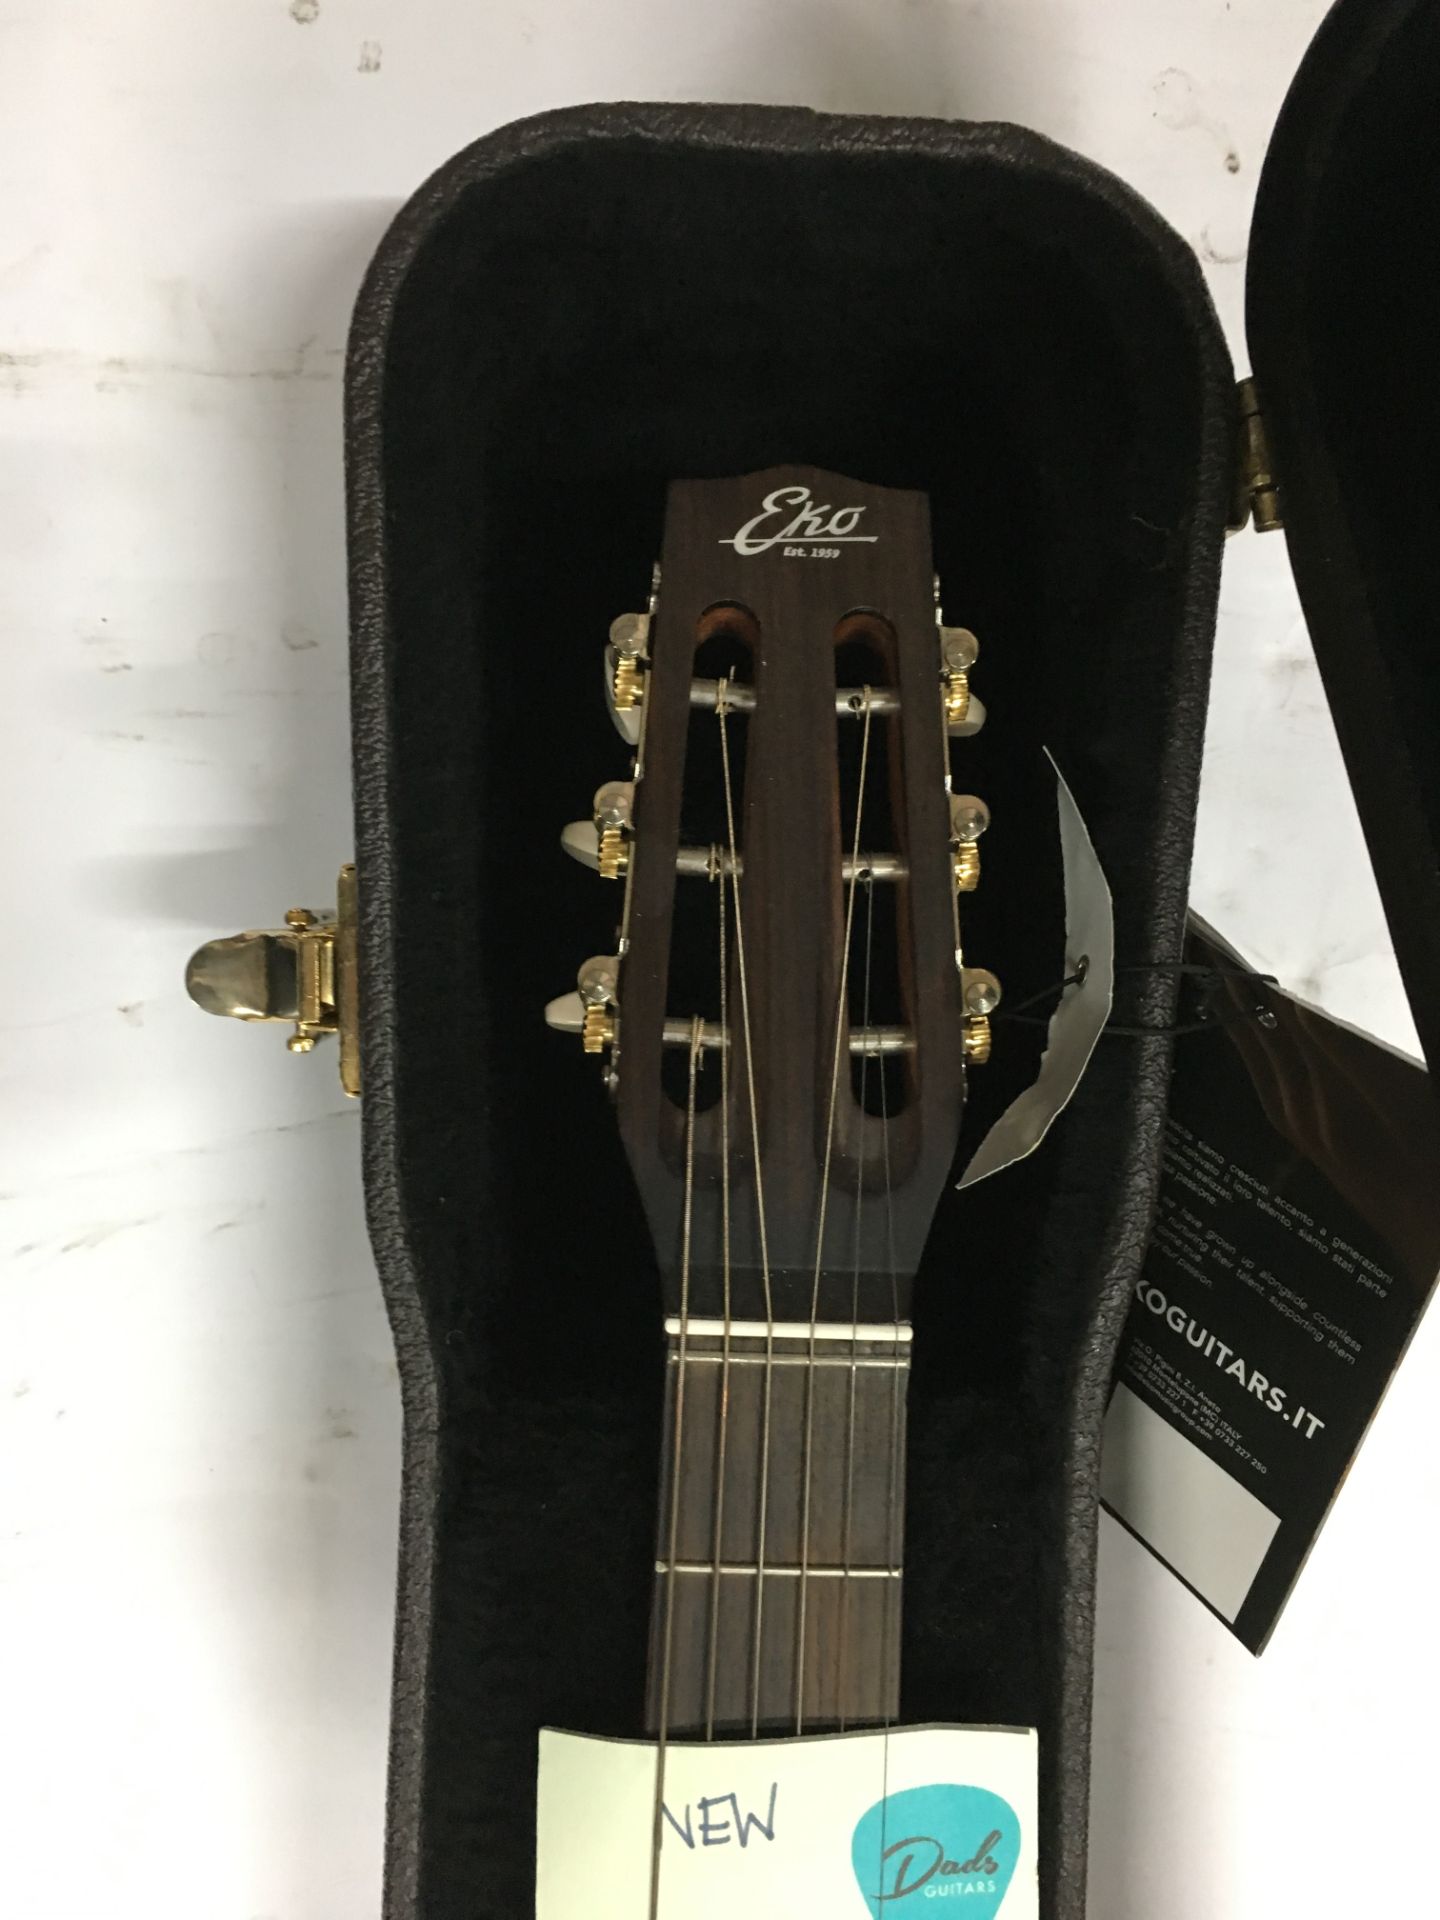 Eko Evo Gypsy Acoustic Guitar | New | In Case | RRP £395 - Image 3 of 3